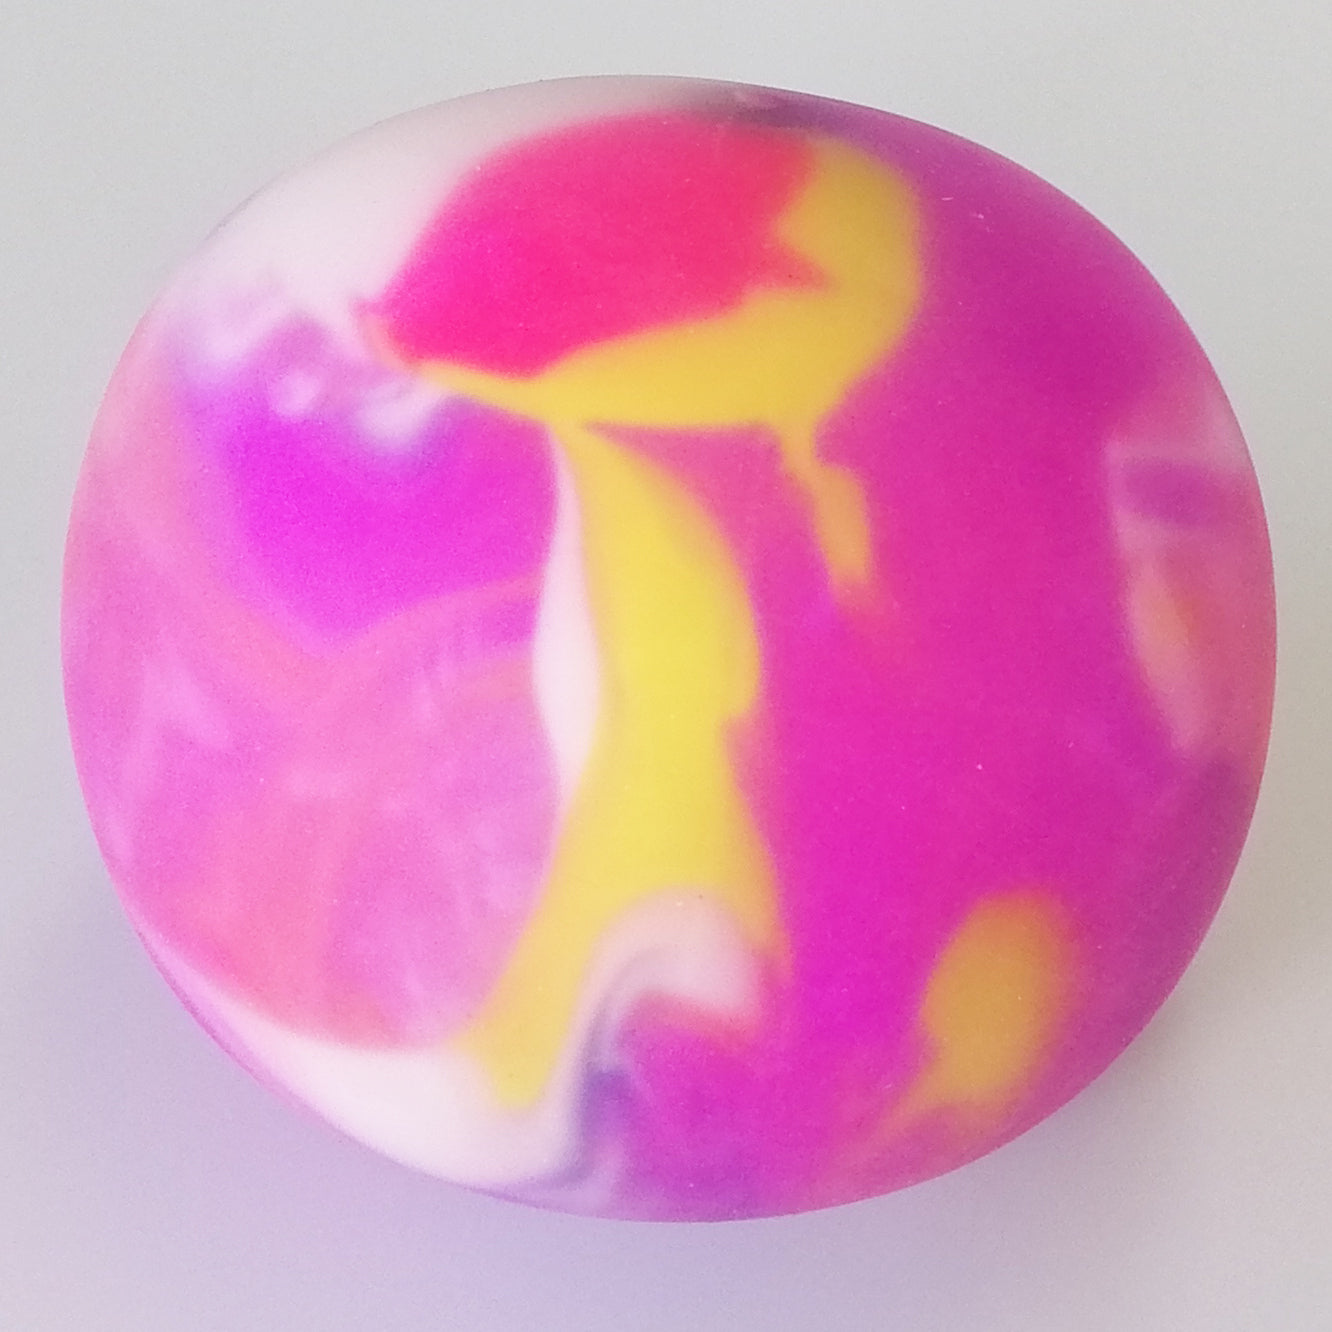 Marble Pattern Stress Ball